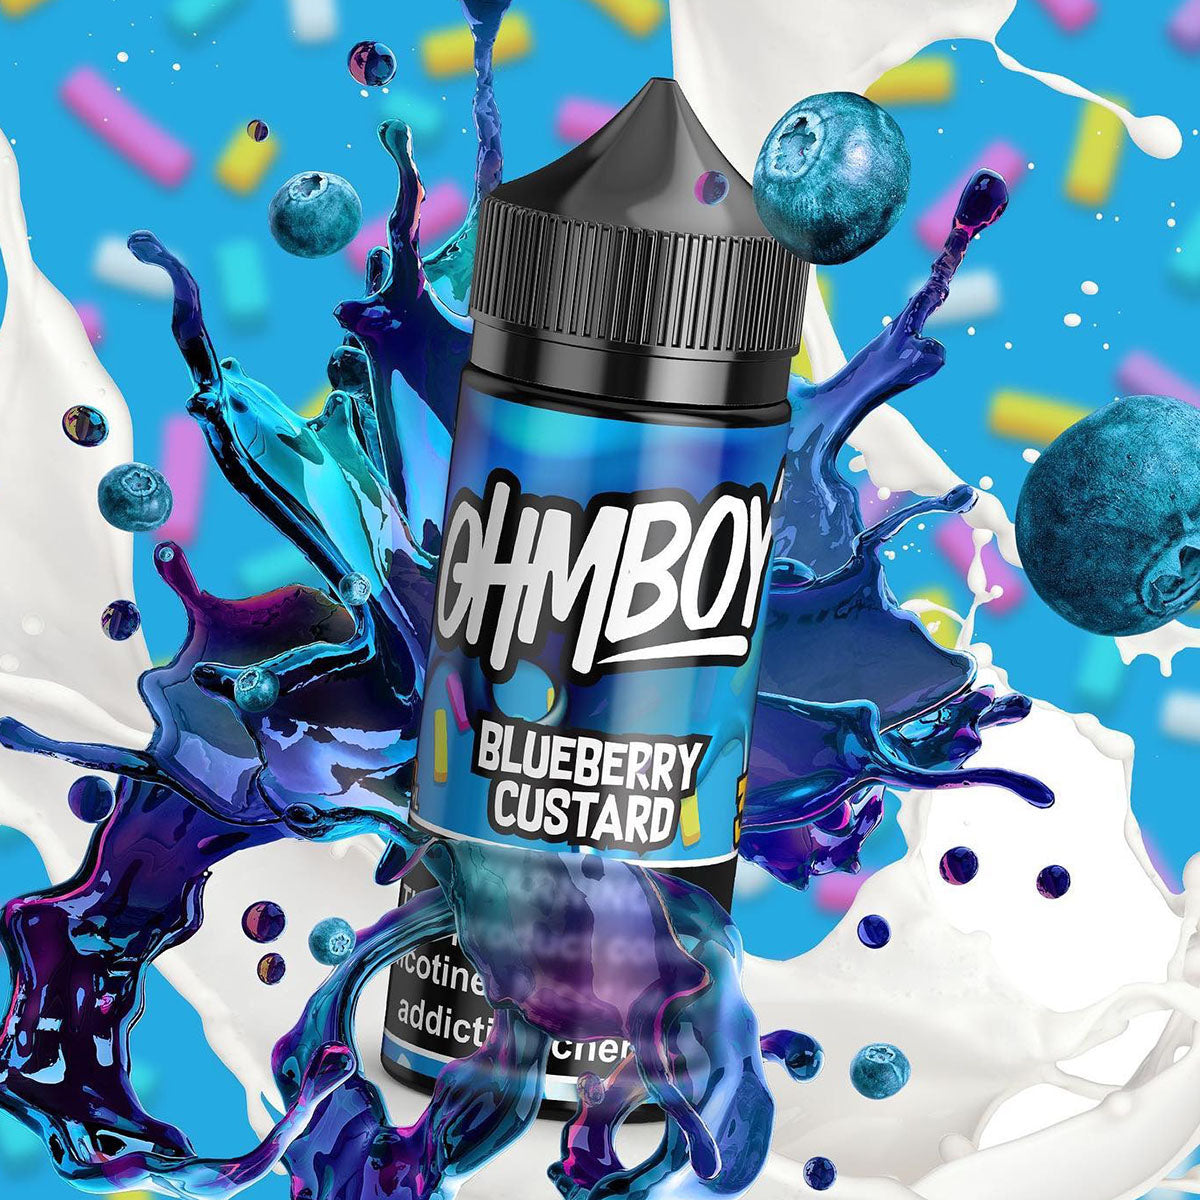 Blueberry Custard 100ml Shortfill by OhmBoy